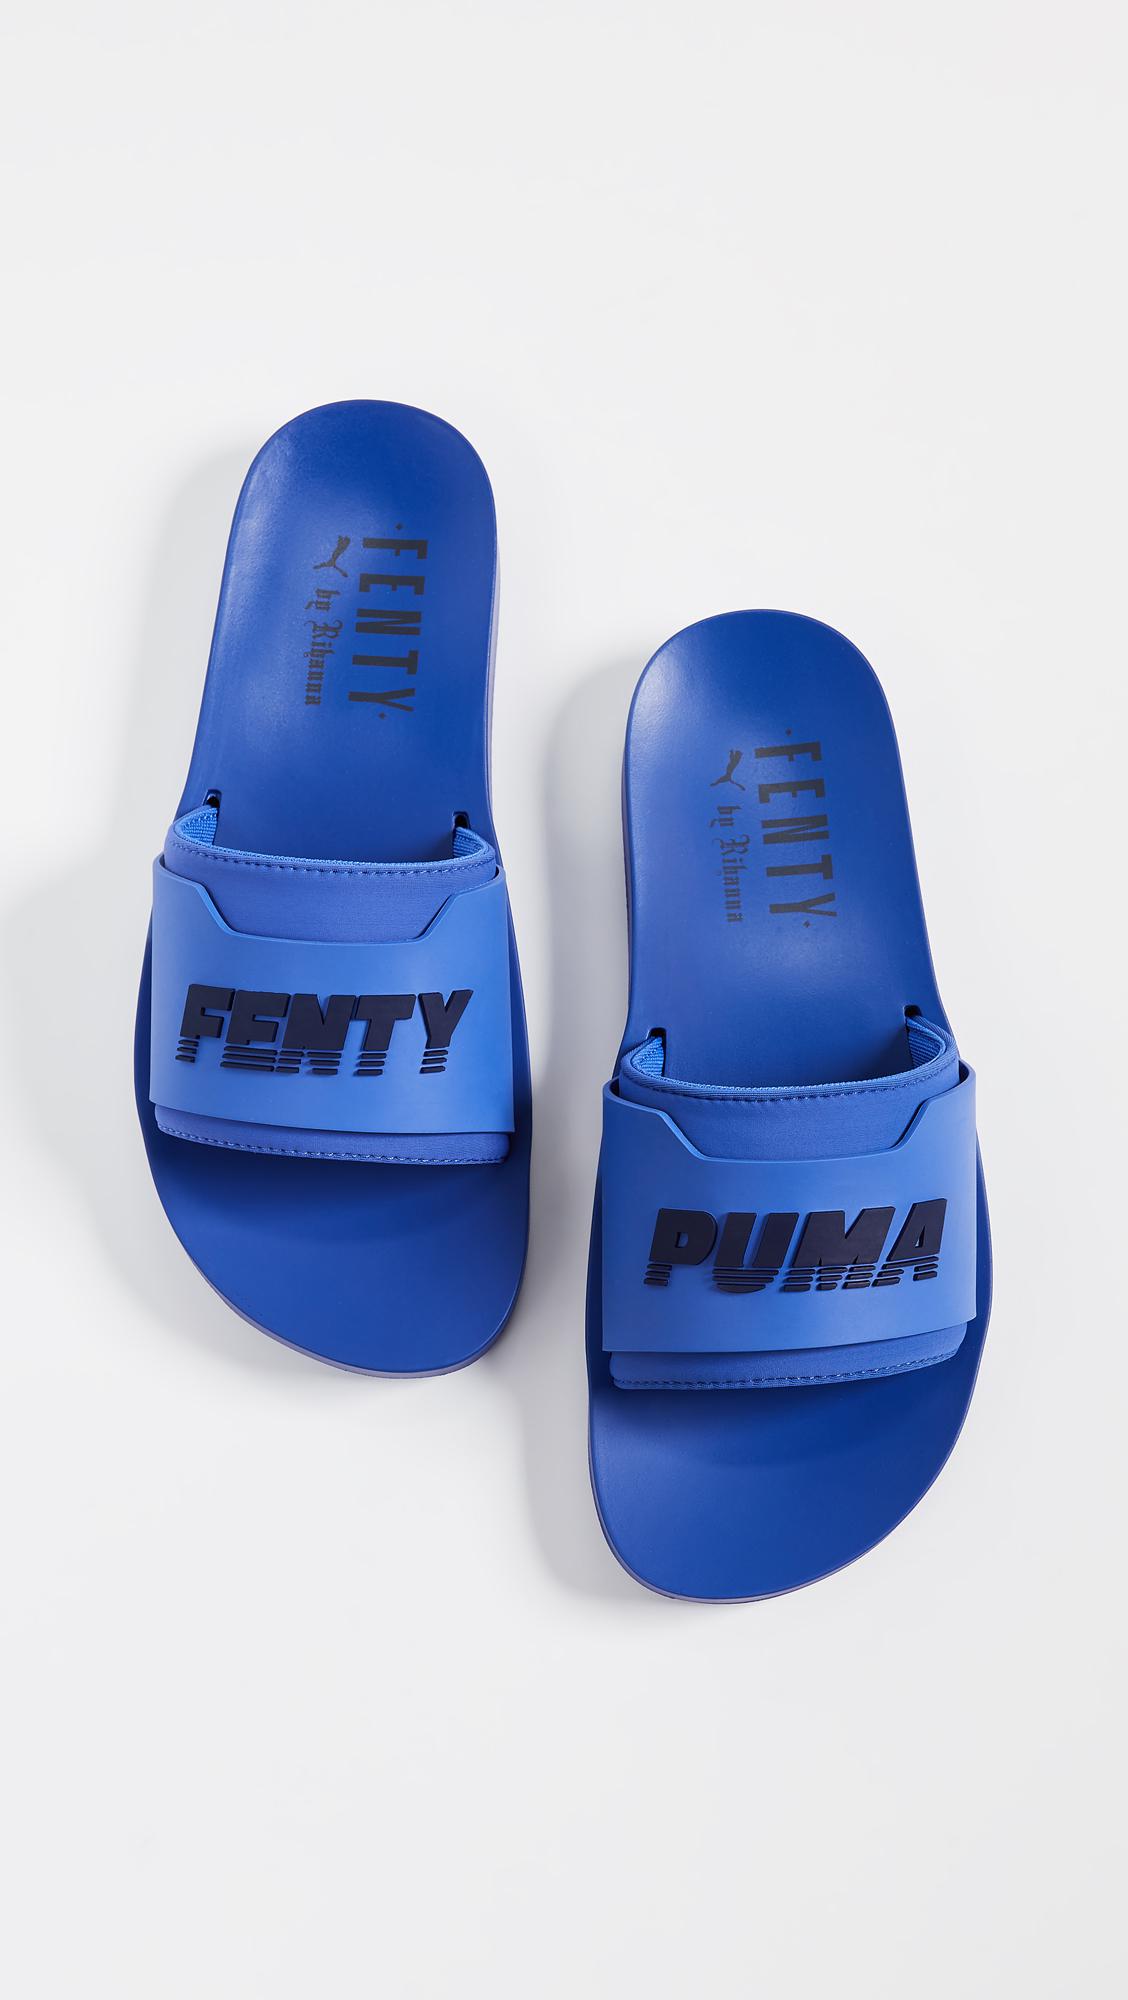 fenty puma slides blue